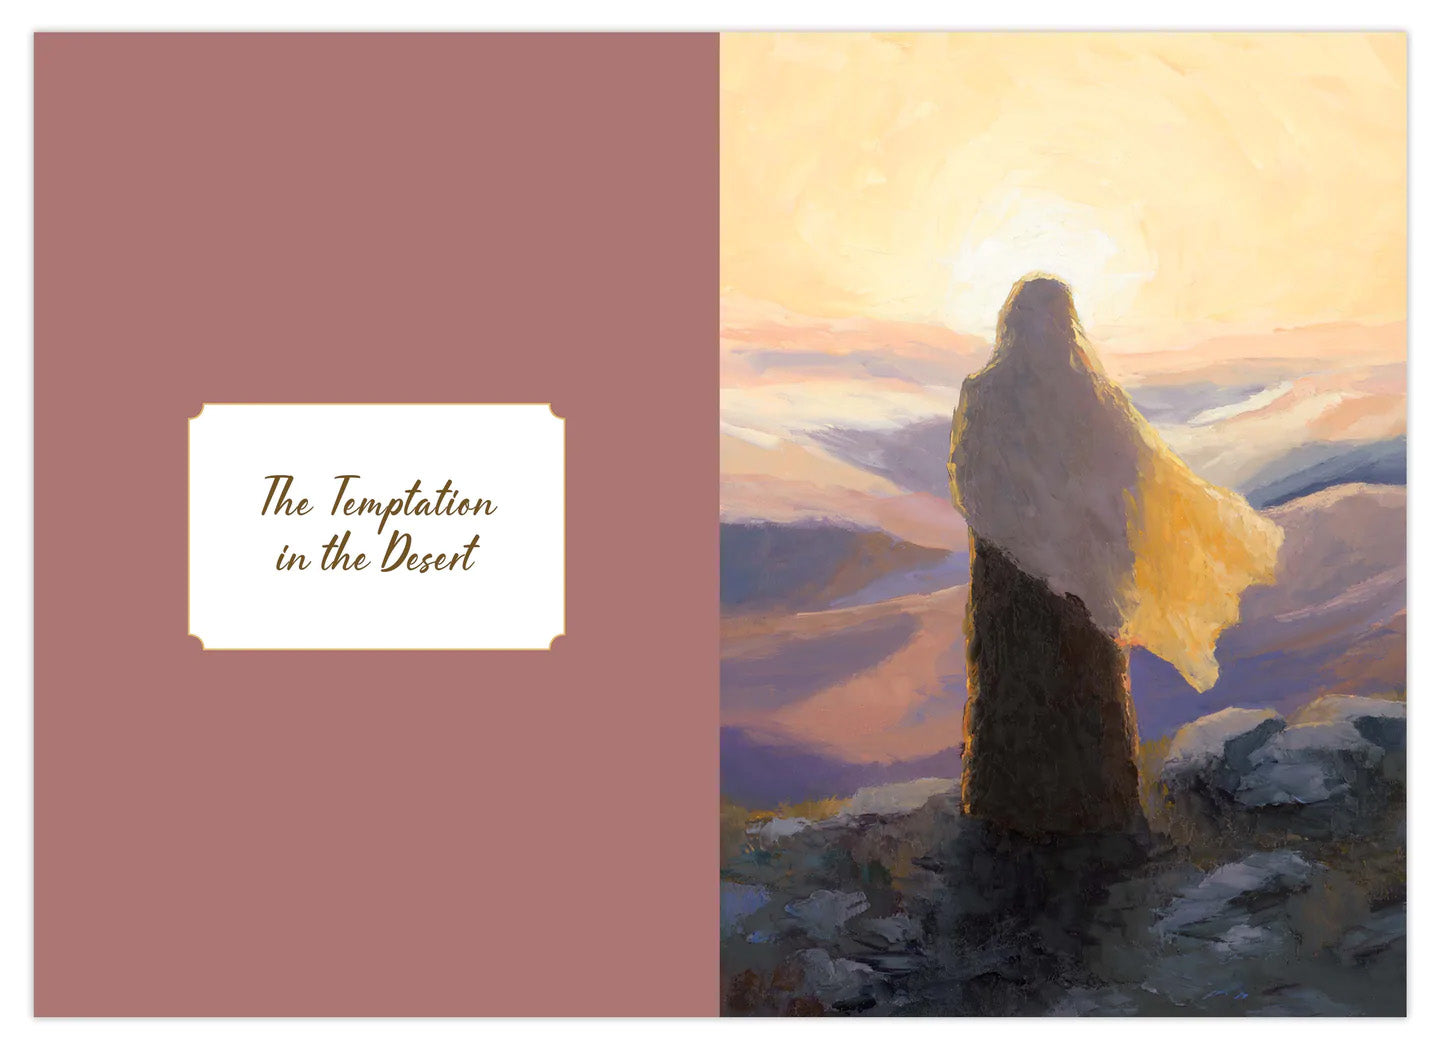 [PRE-ORDER] The Ascension Lenten Companion: Year C, Journal